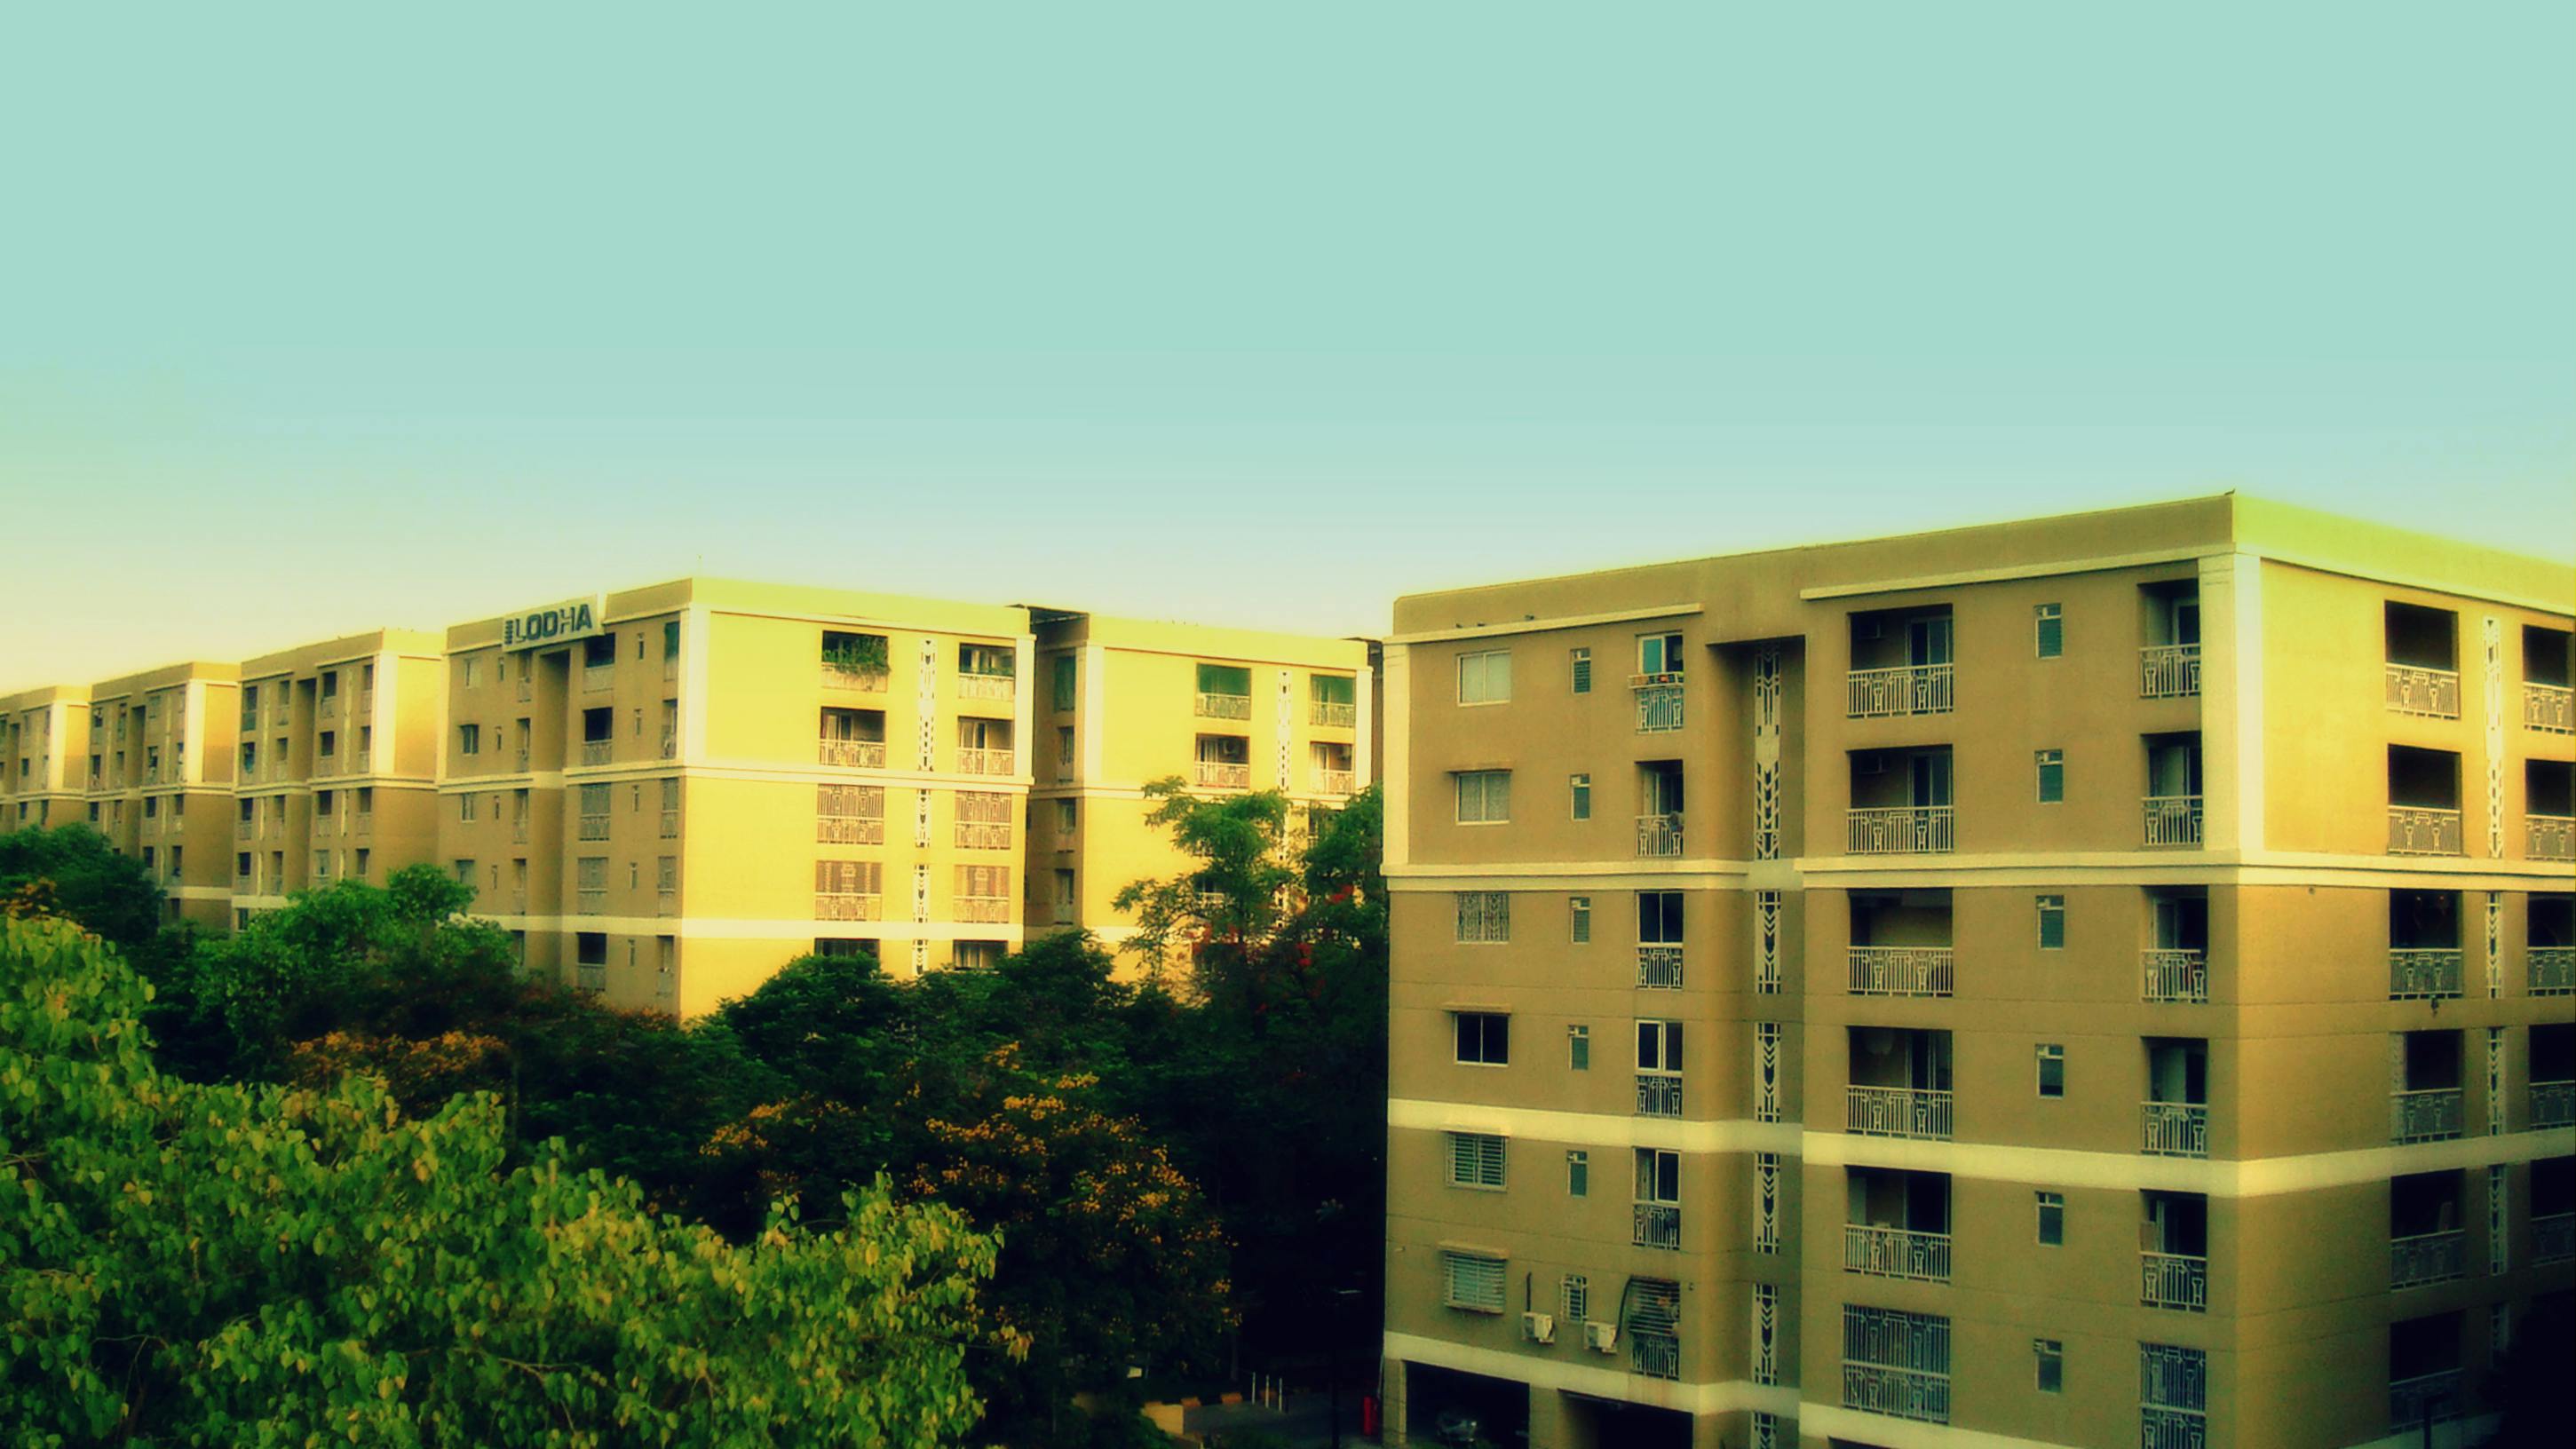 Free stock photo of apartment blocks, apartment buildings, apartments